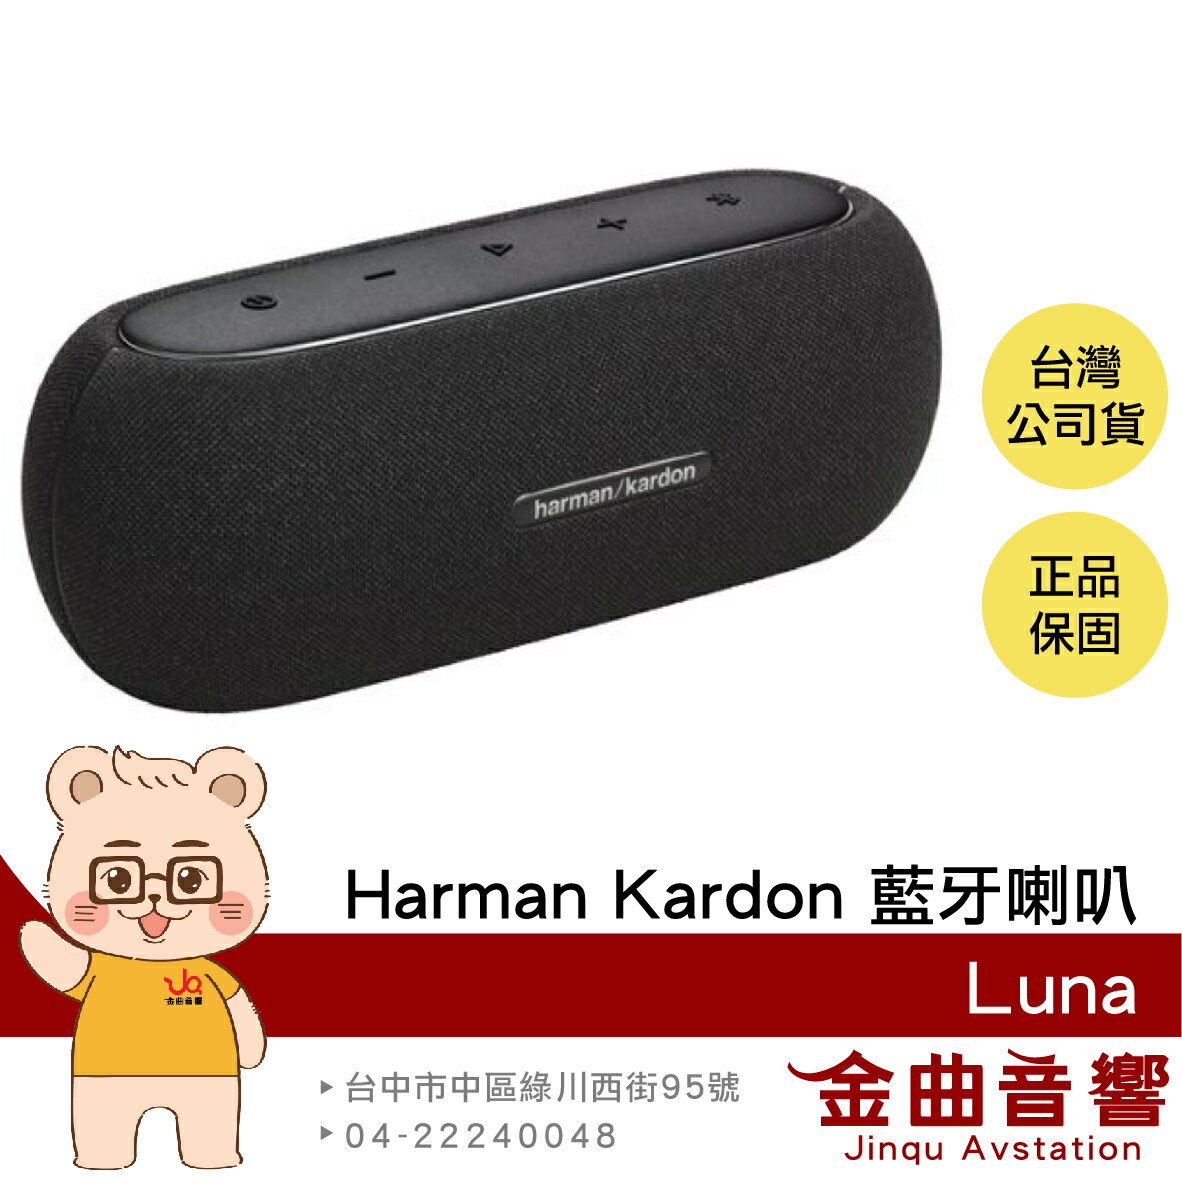 Harman Kardon Luna 黑色 IP67 防水防塵 音樂串流 藍牙5.3 隨身藍牙喇叭 | 金曲音響